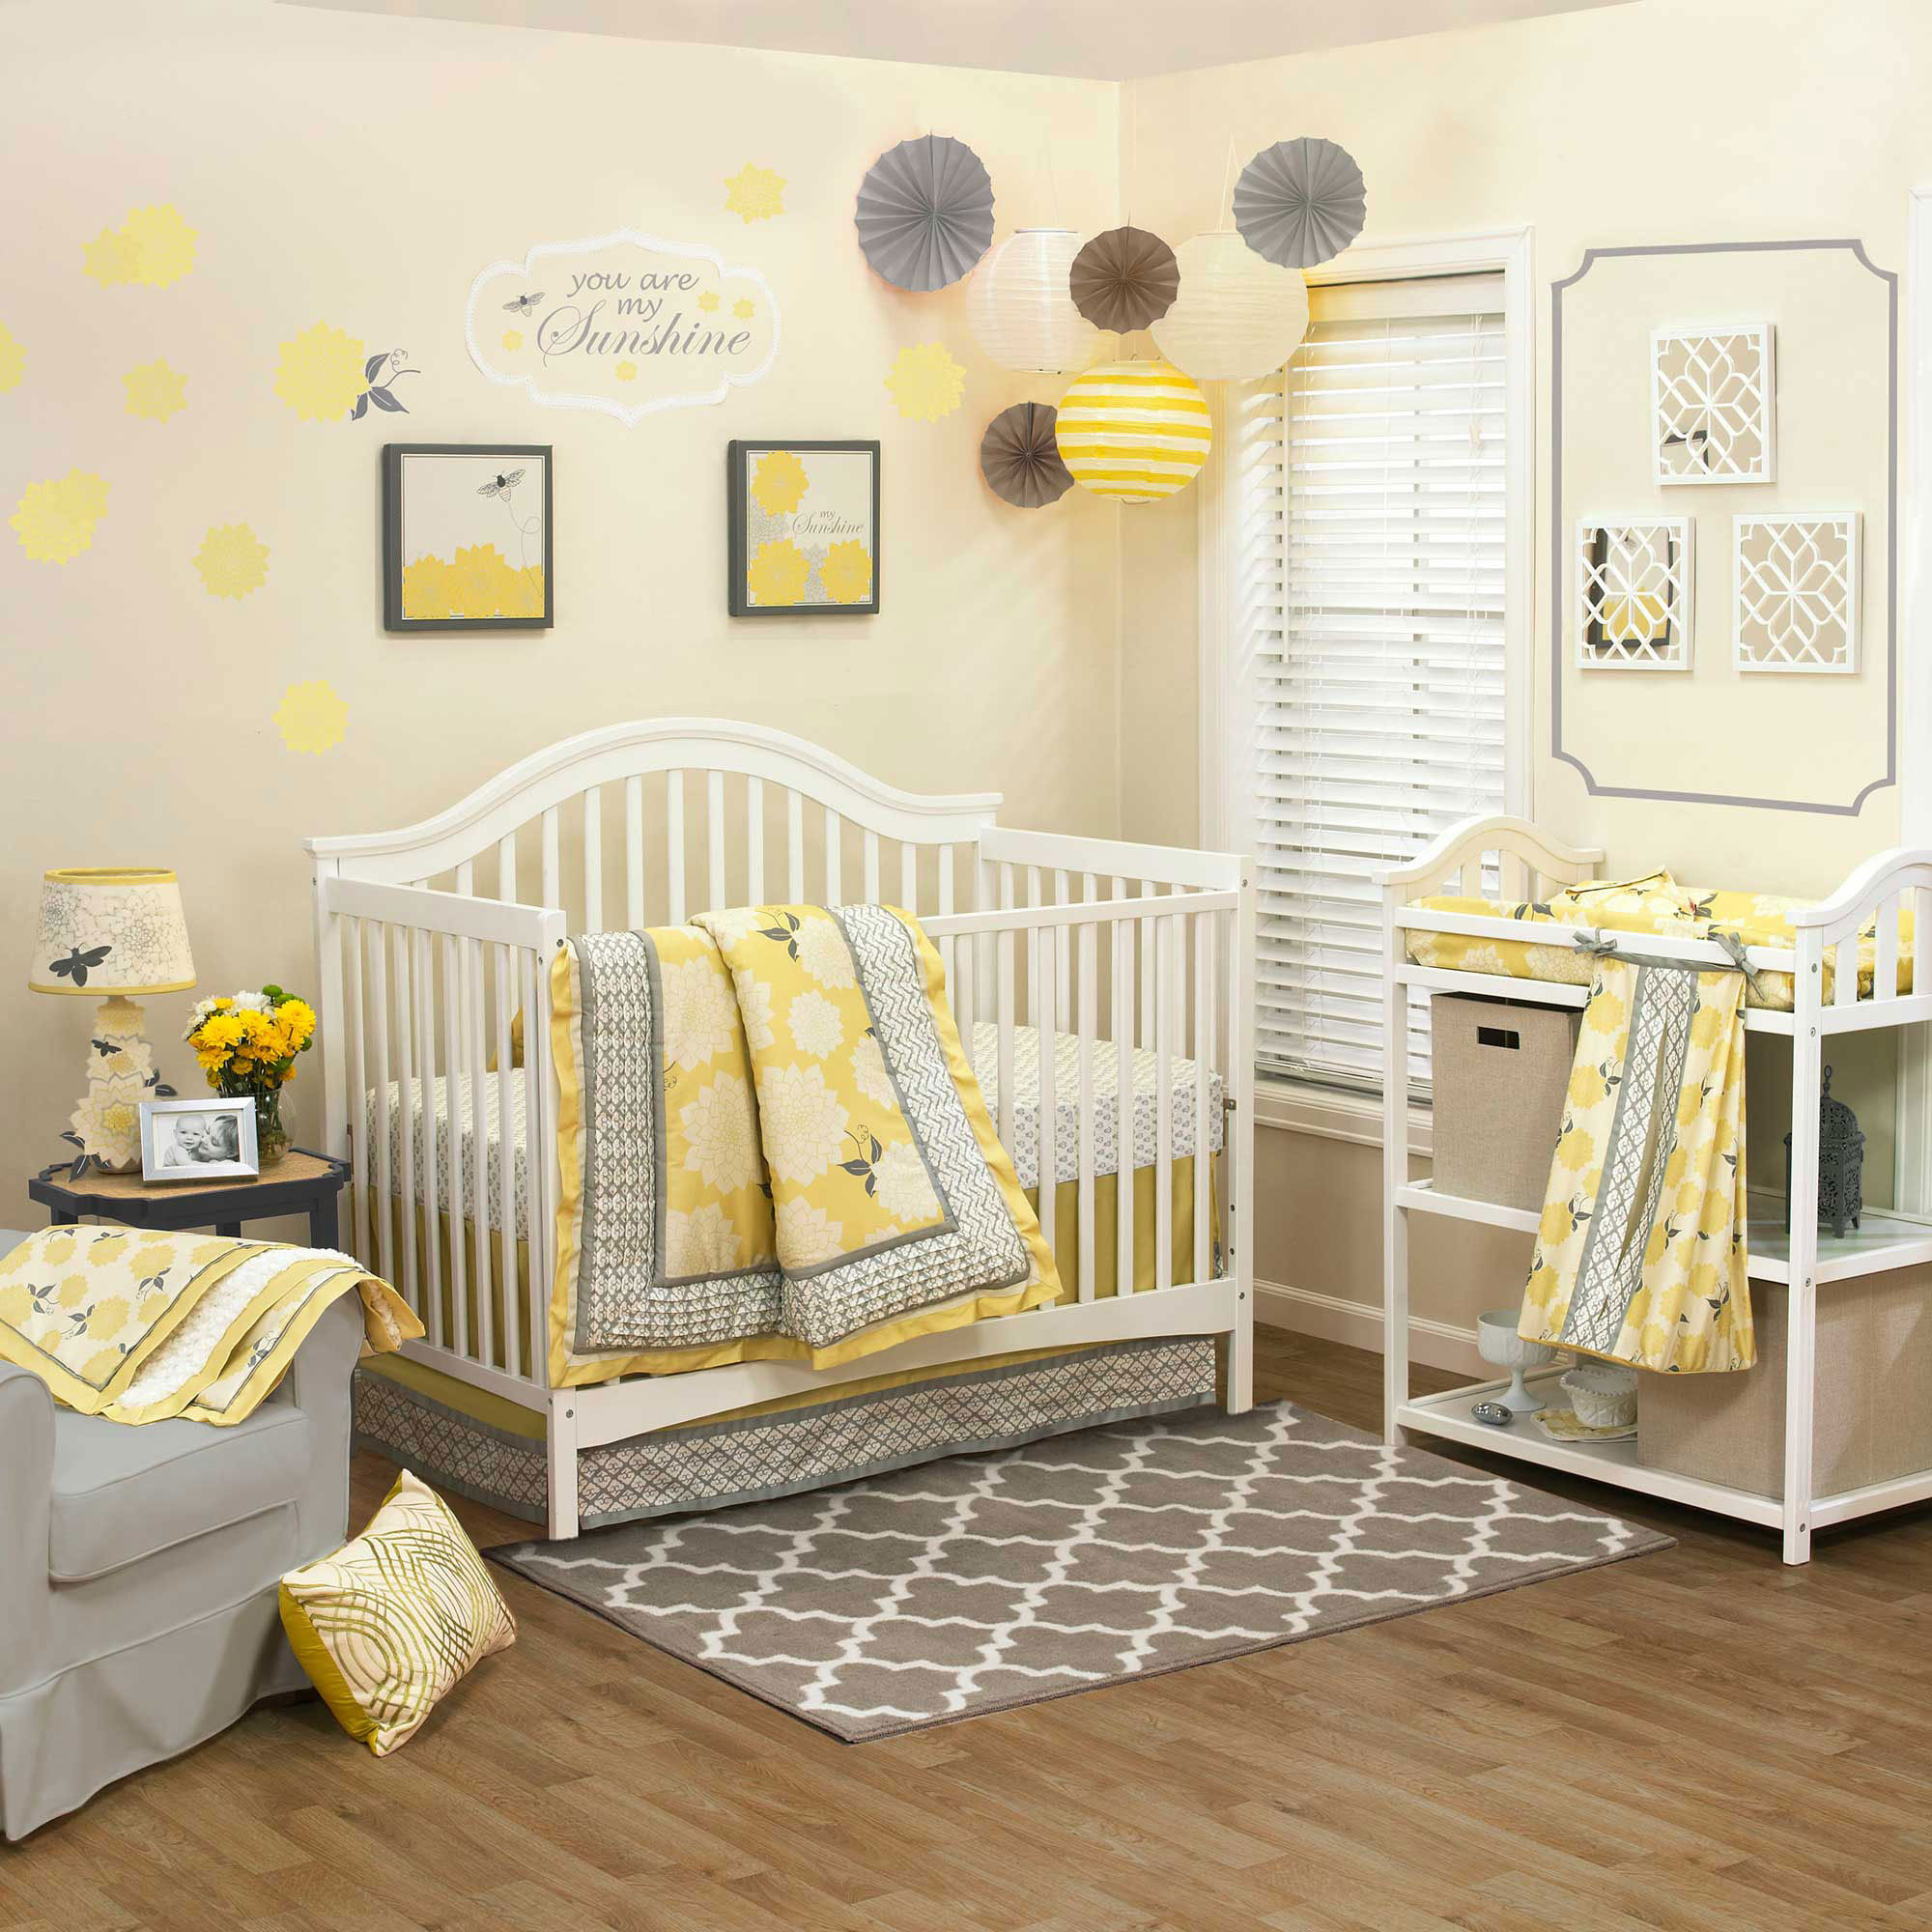 Girls Baby Room Decor
 Baby Girl Nursery Ideas 10 Pretty Examples Decorating Room